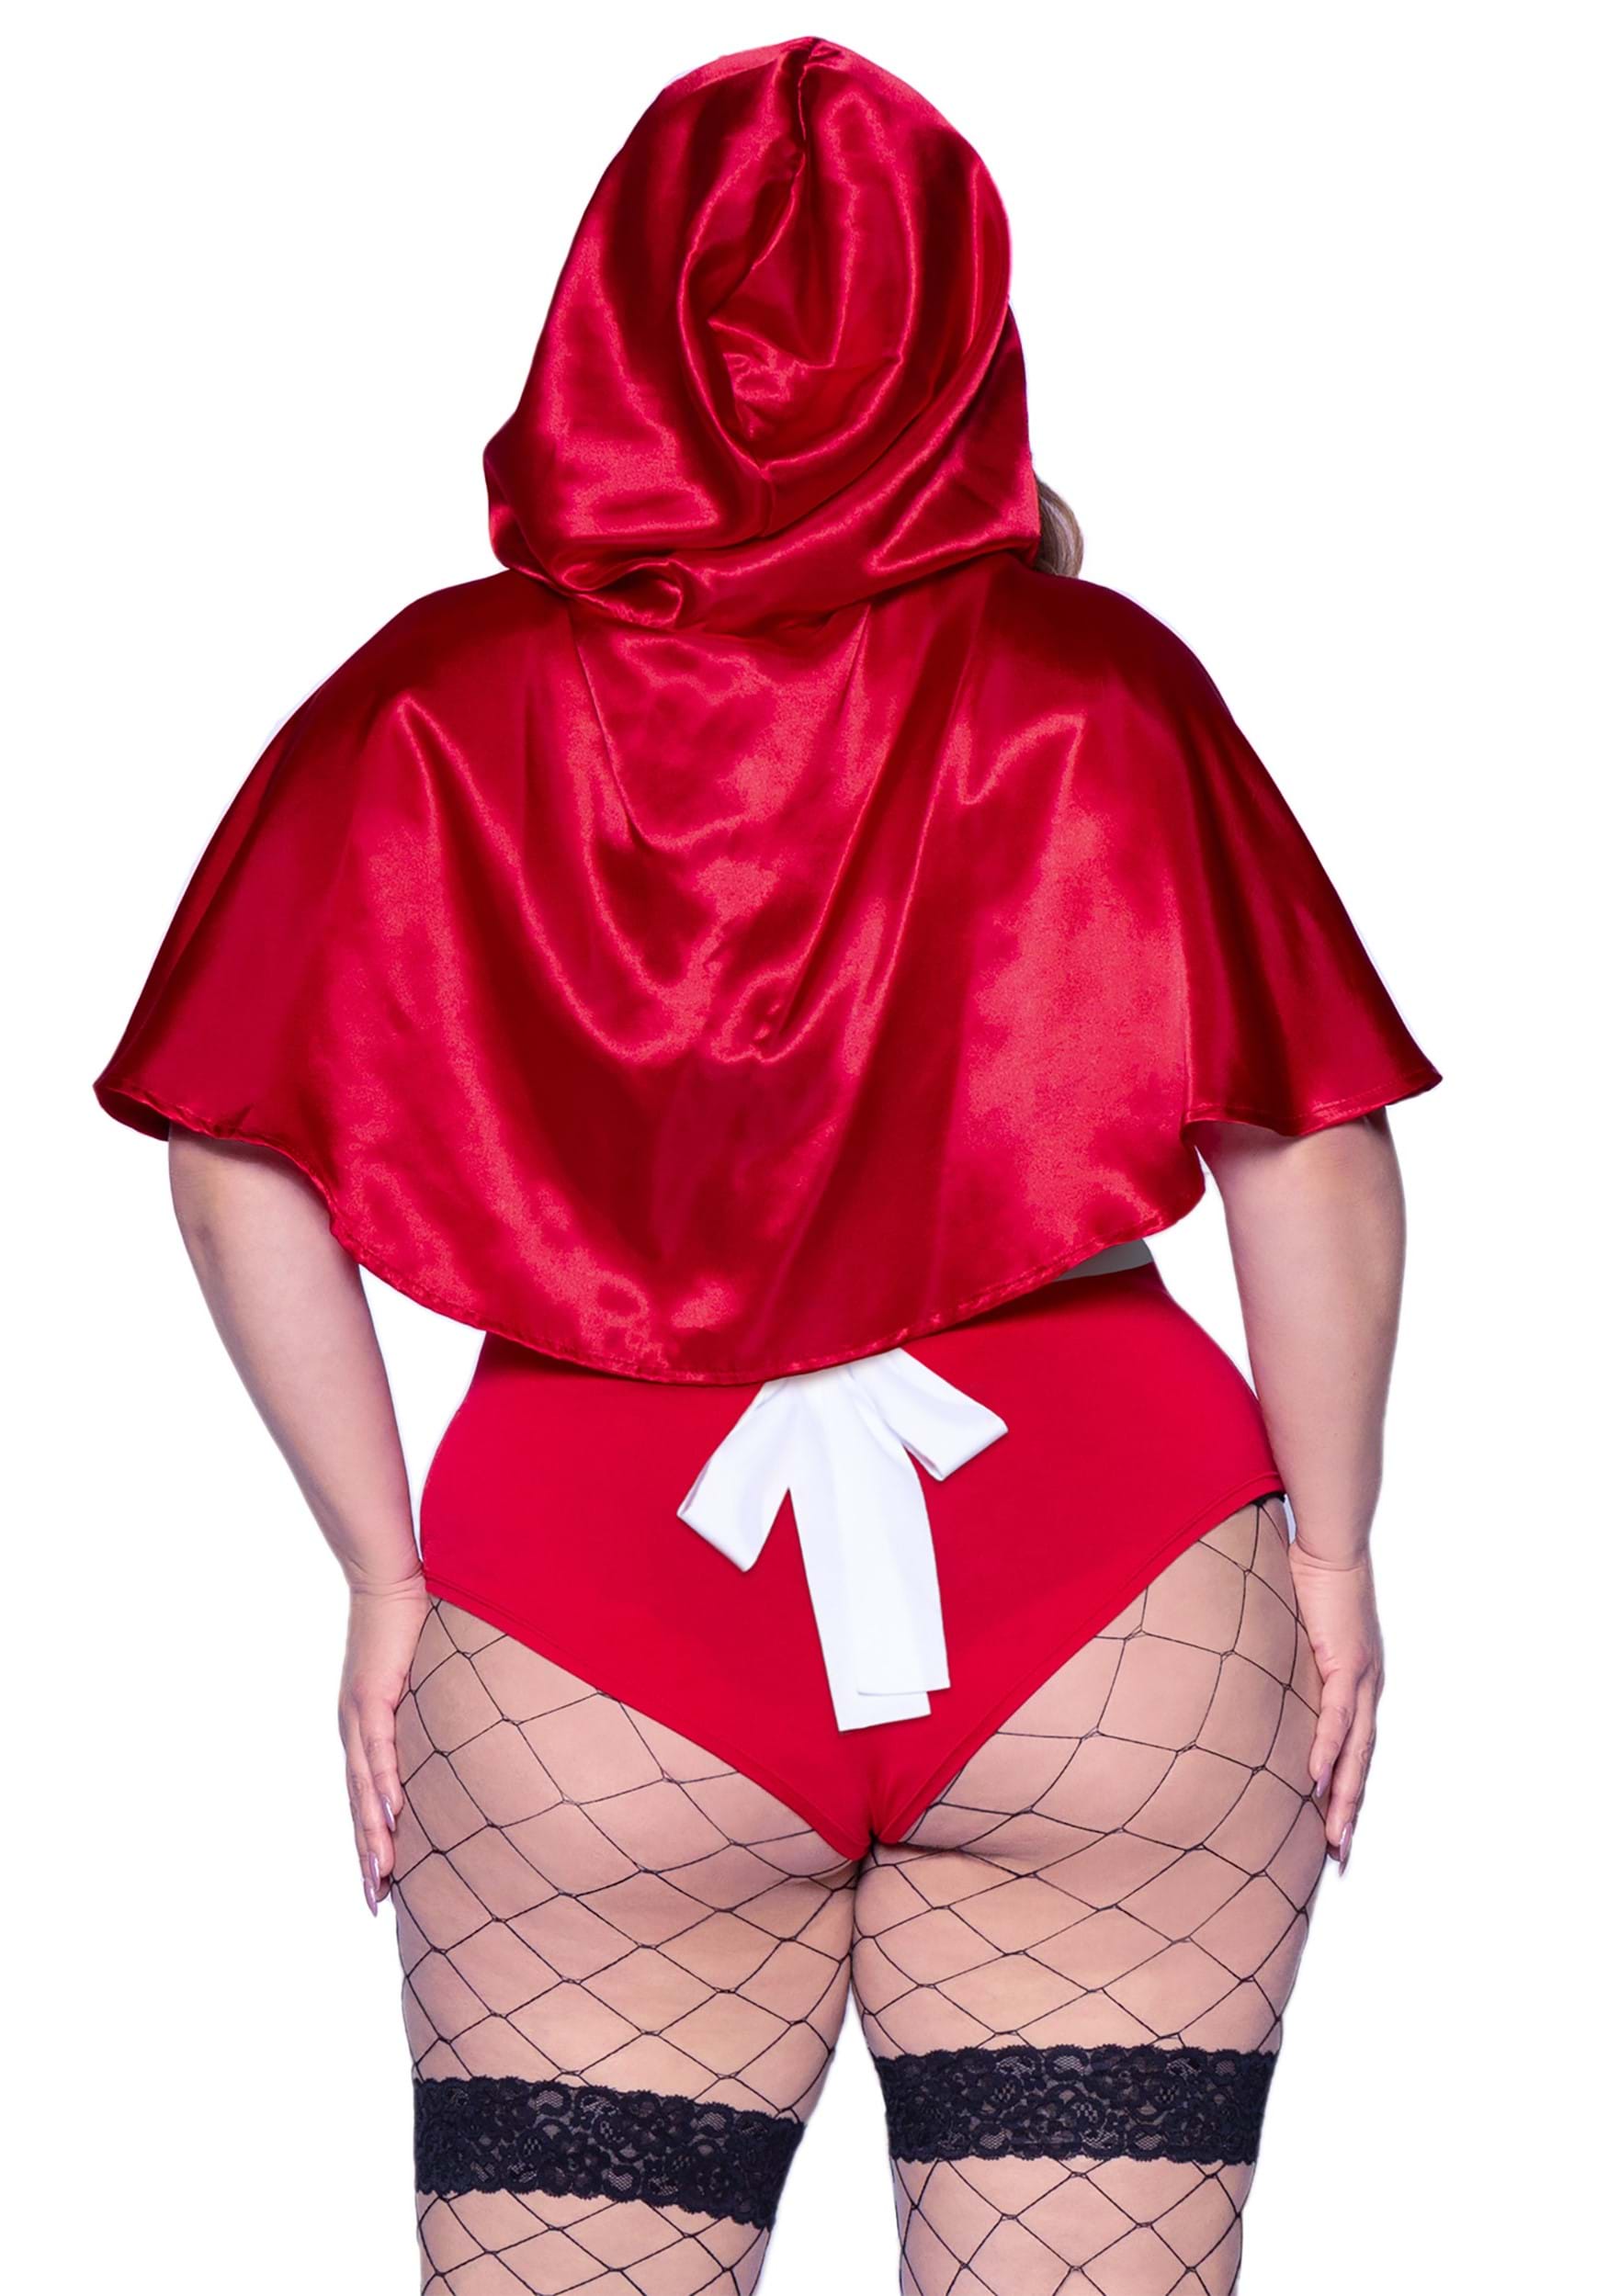 Plus Size Women's Naughty Miss Red Fancy Dress Costume